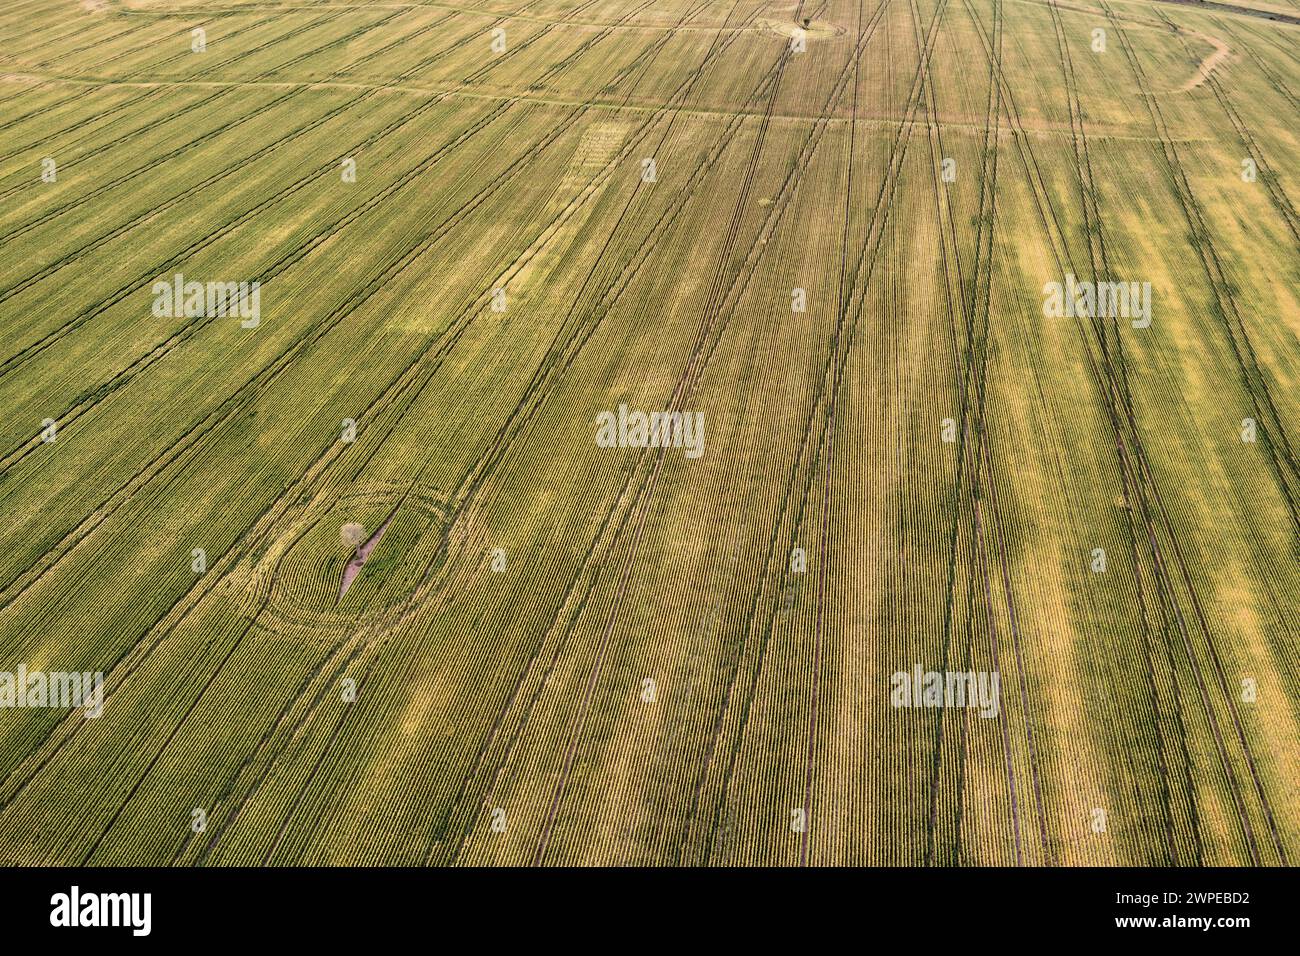 Aerial lone Queensland Bottle Tree in fields of wheat near Wallumbilla Queensland Australia Stock Photo